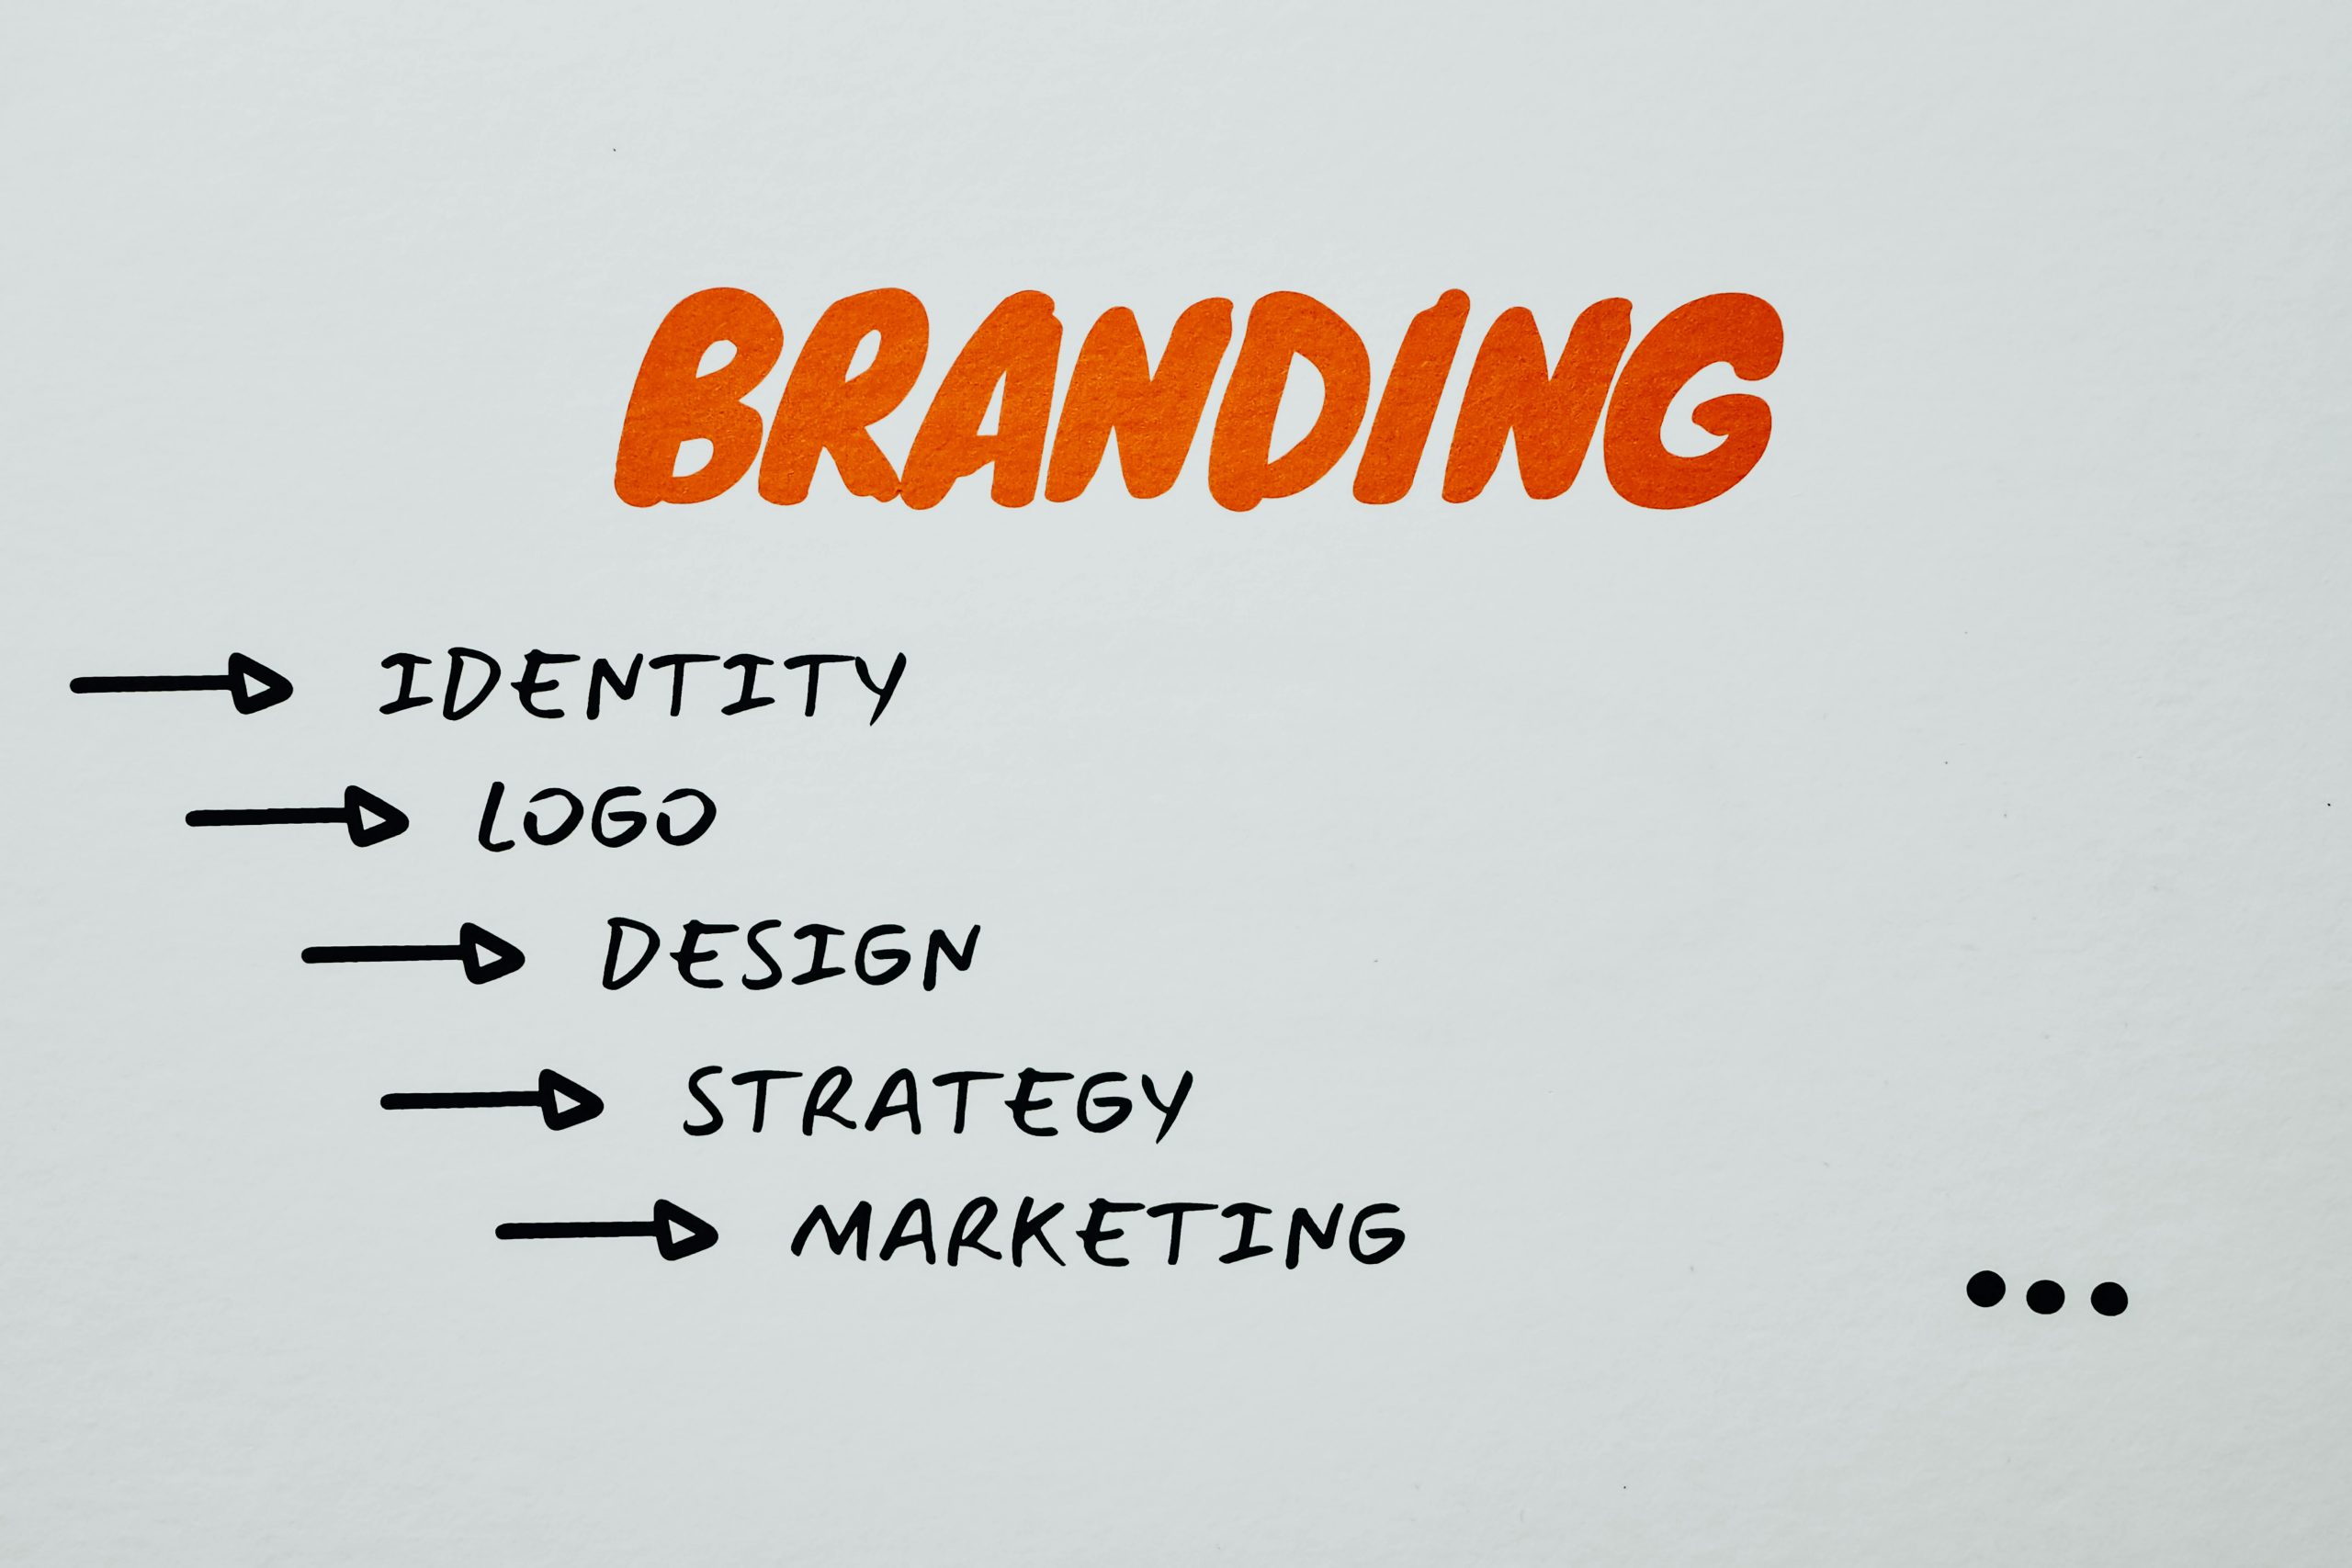 Importance of brand name generators for branding